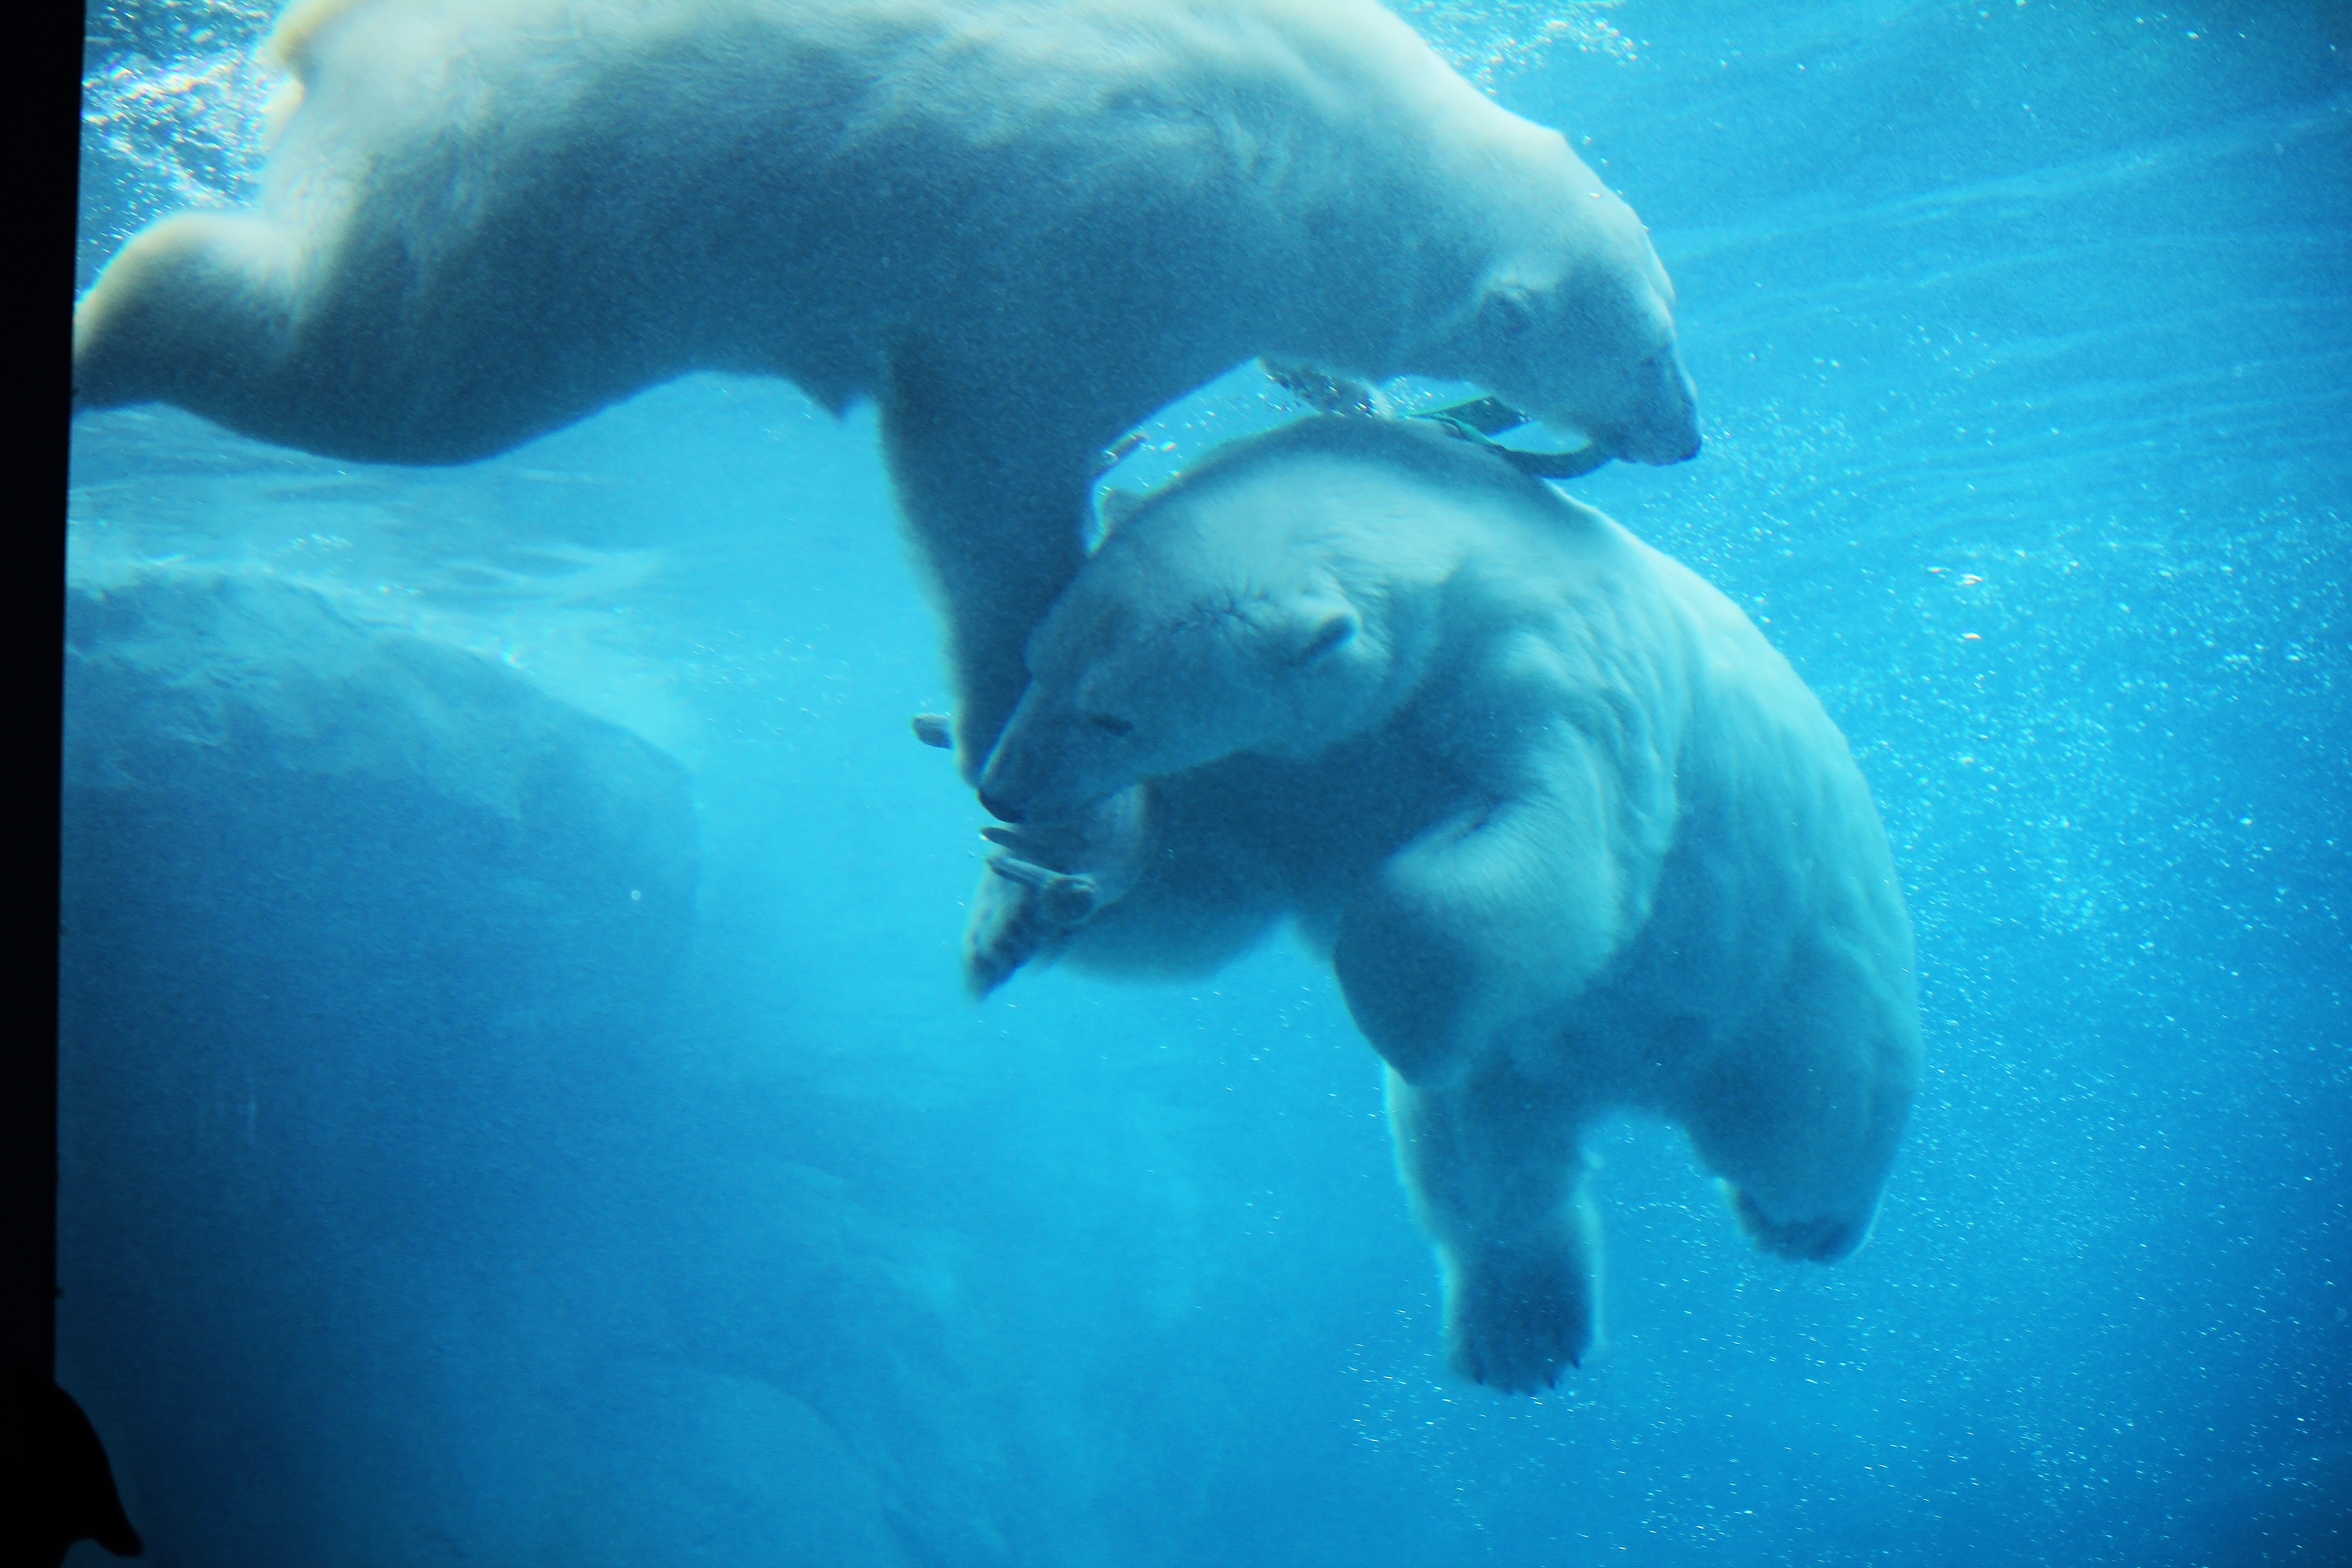 Two polar bears at the Journey to Churchill exhibit in Winnipeg, Manitoba